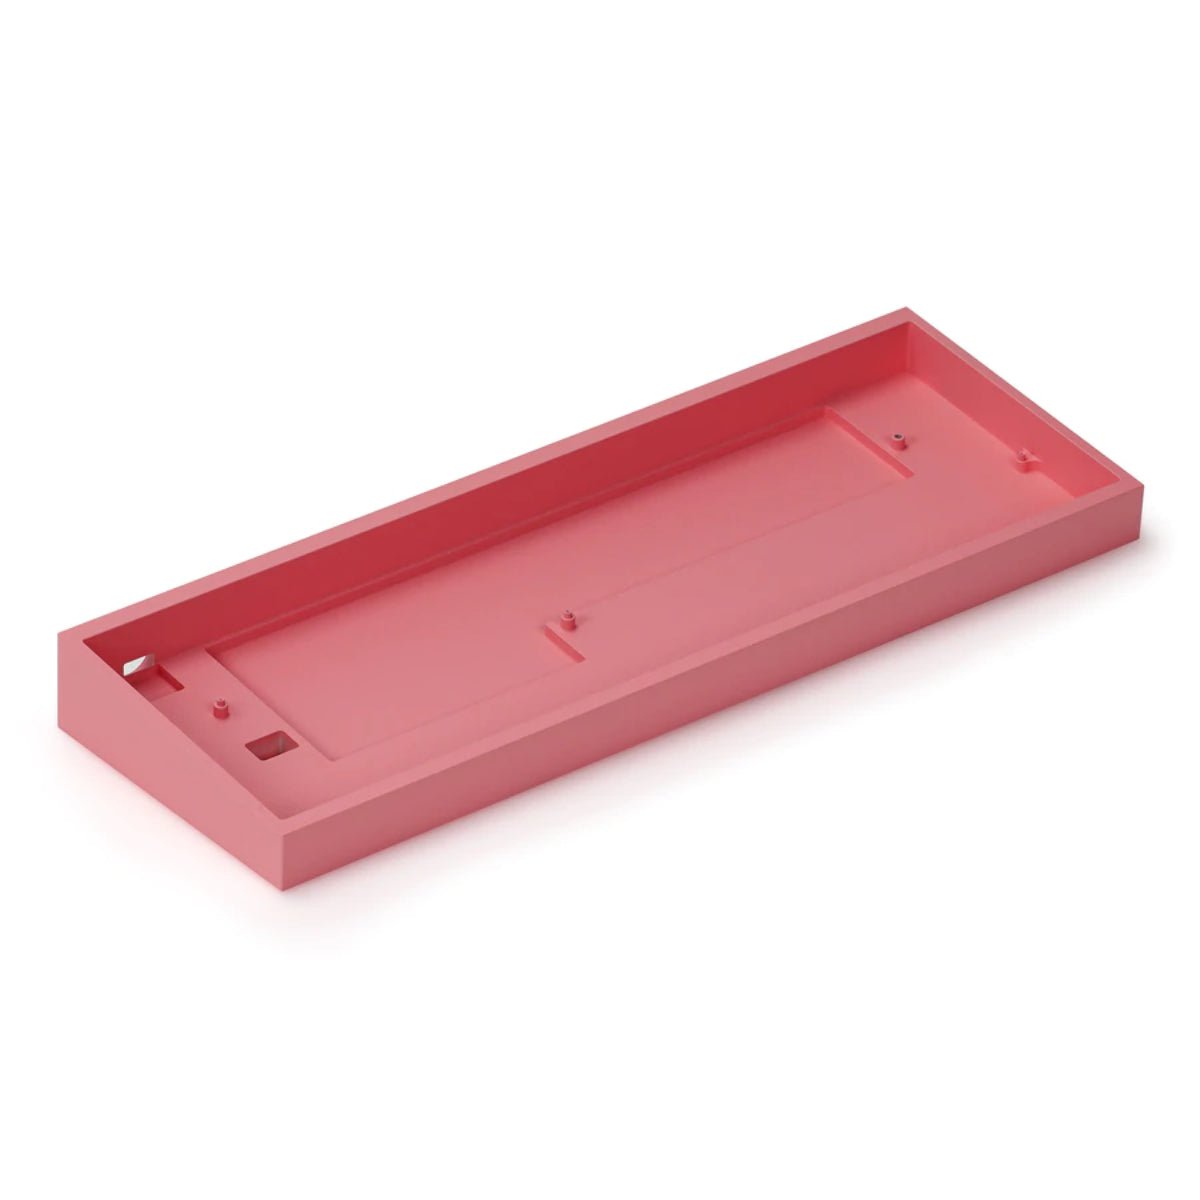 TOFU60 Aluminum 60% Keyboard - ٩٧٤ 974 ستور | Store لوحة Pink – Case المفاتيح صندوق 